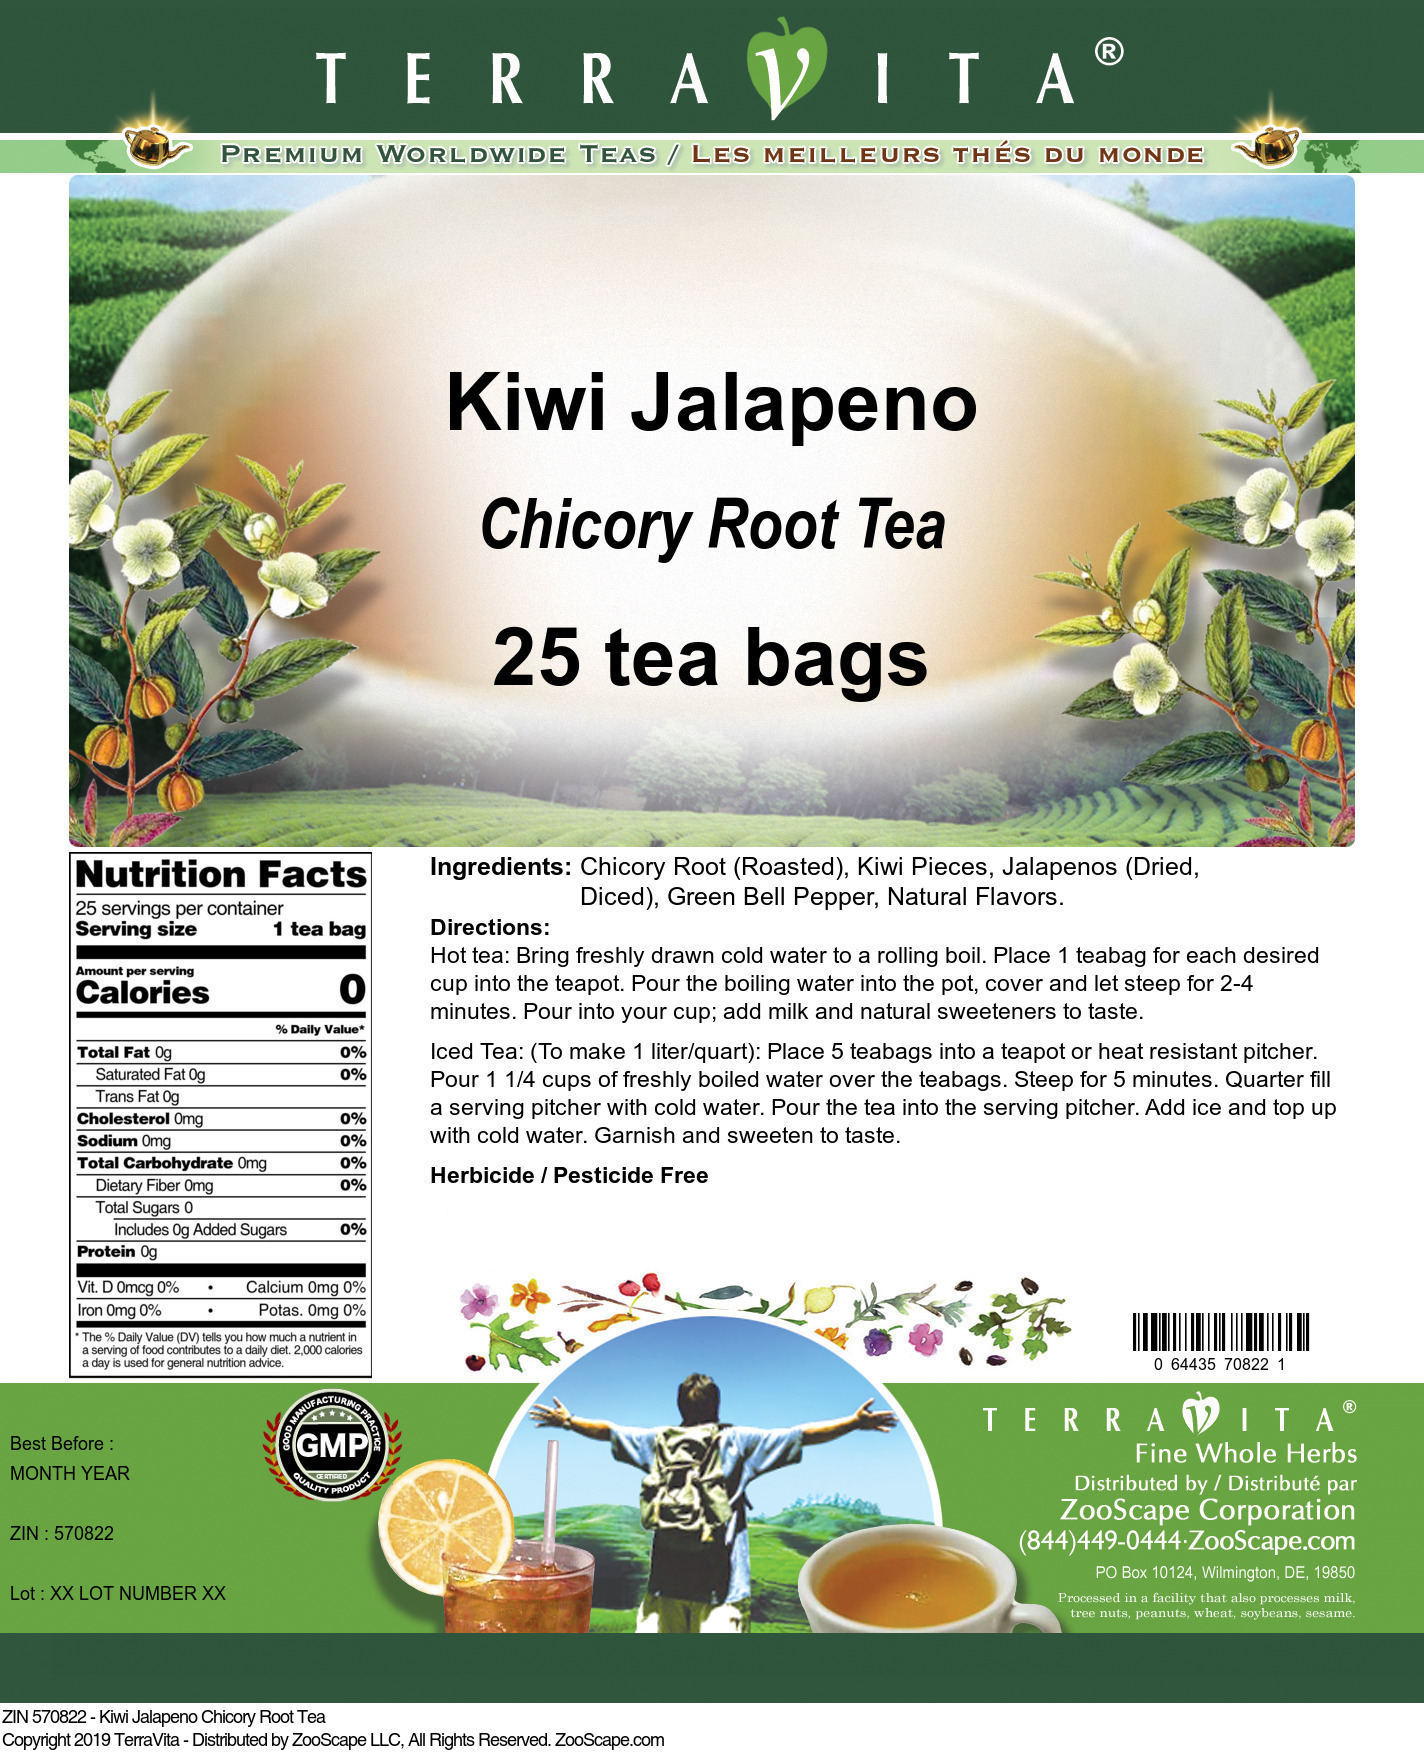 Kiwi Jalapeno Chicory Root Tea - Label